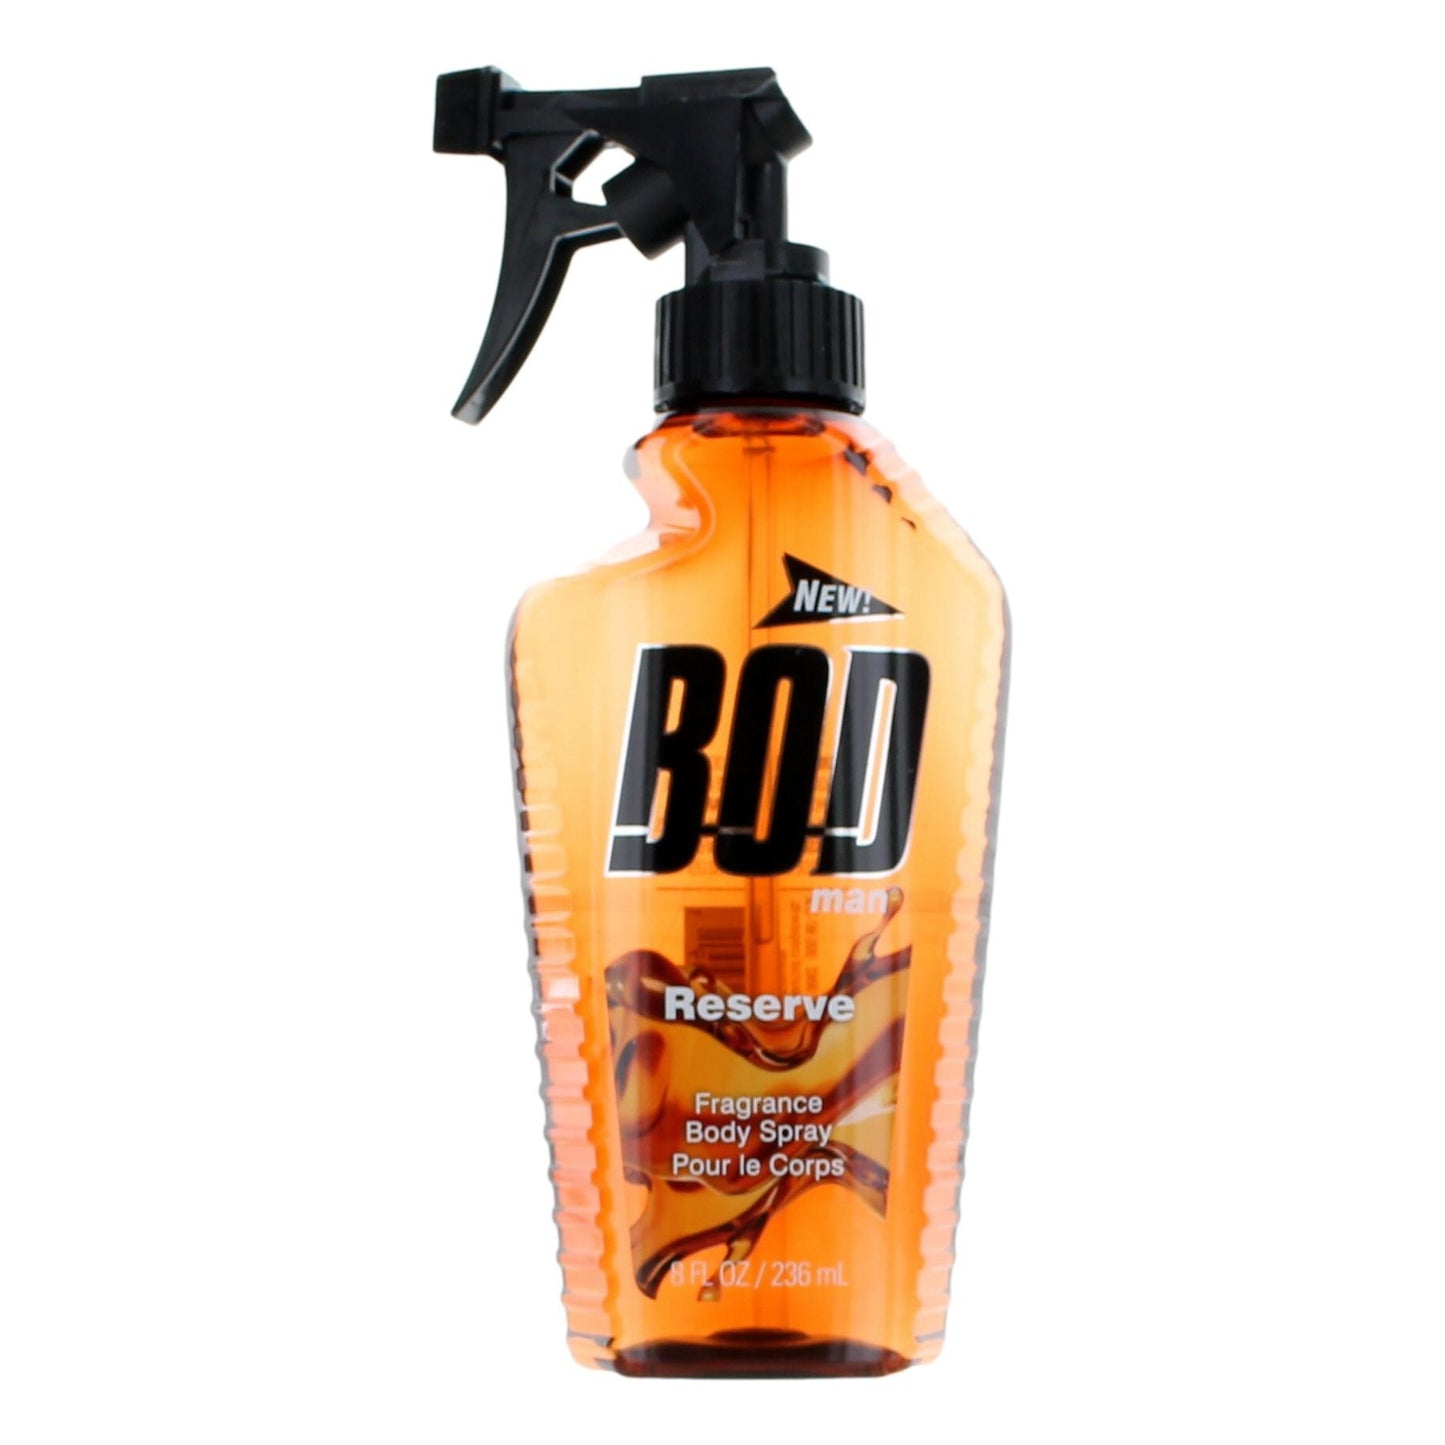 Bottle of Bod Man Reserve by Parfums De Coeur, 8 oz Fragrance Body Spray for Men